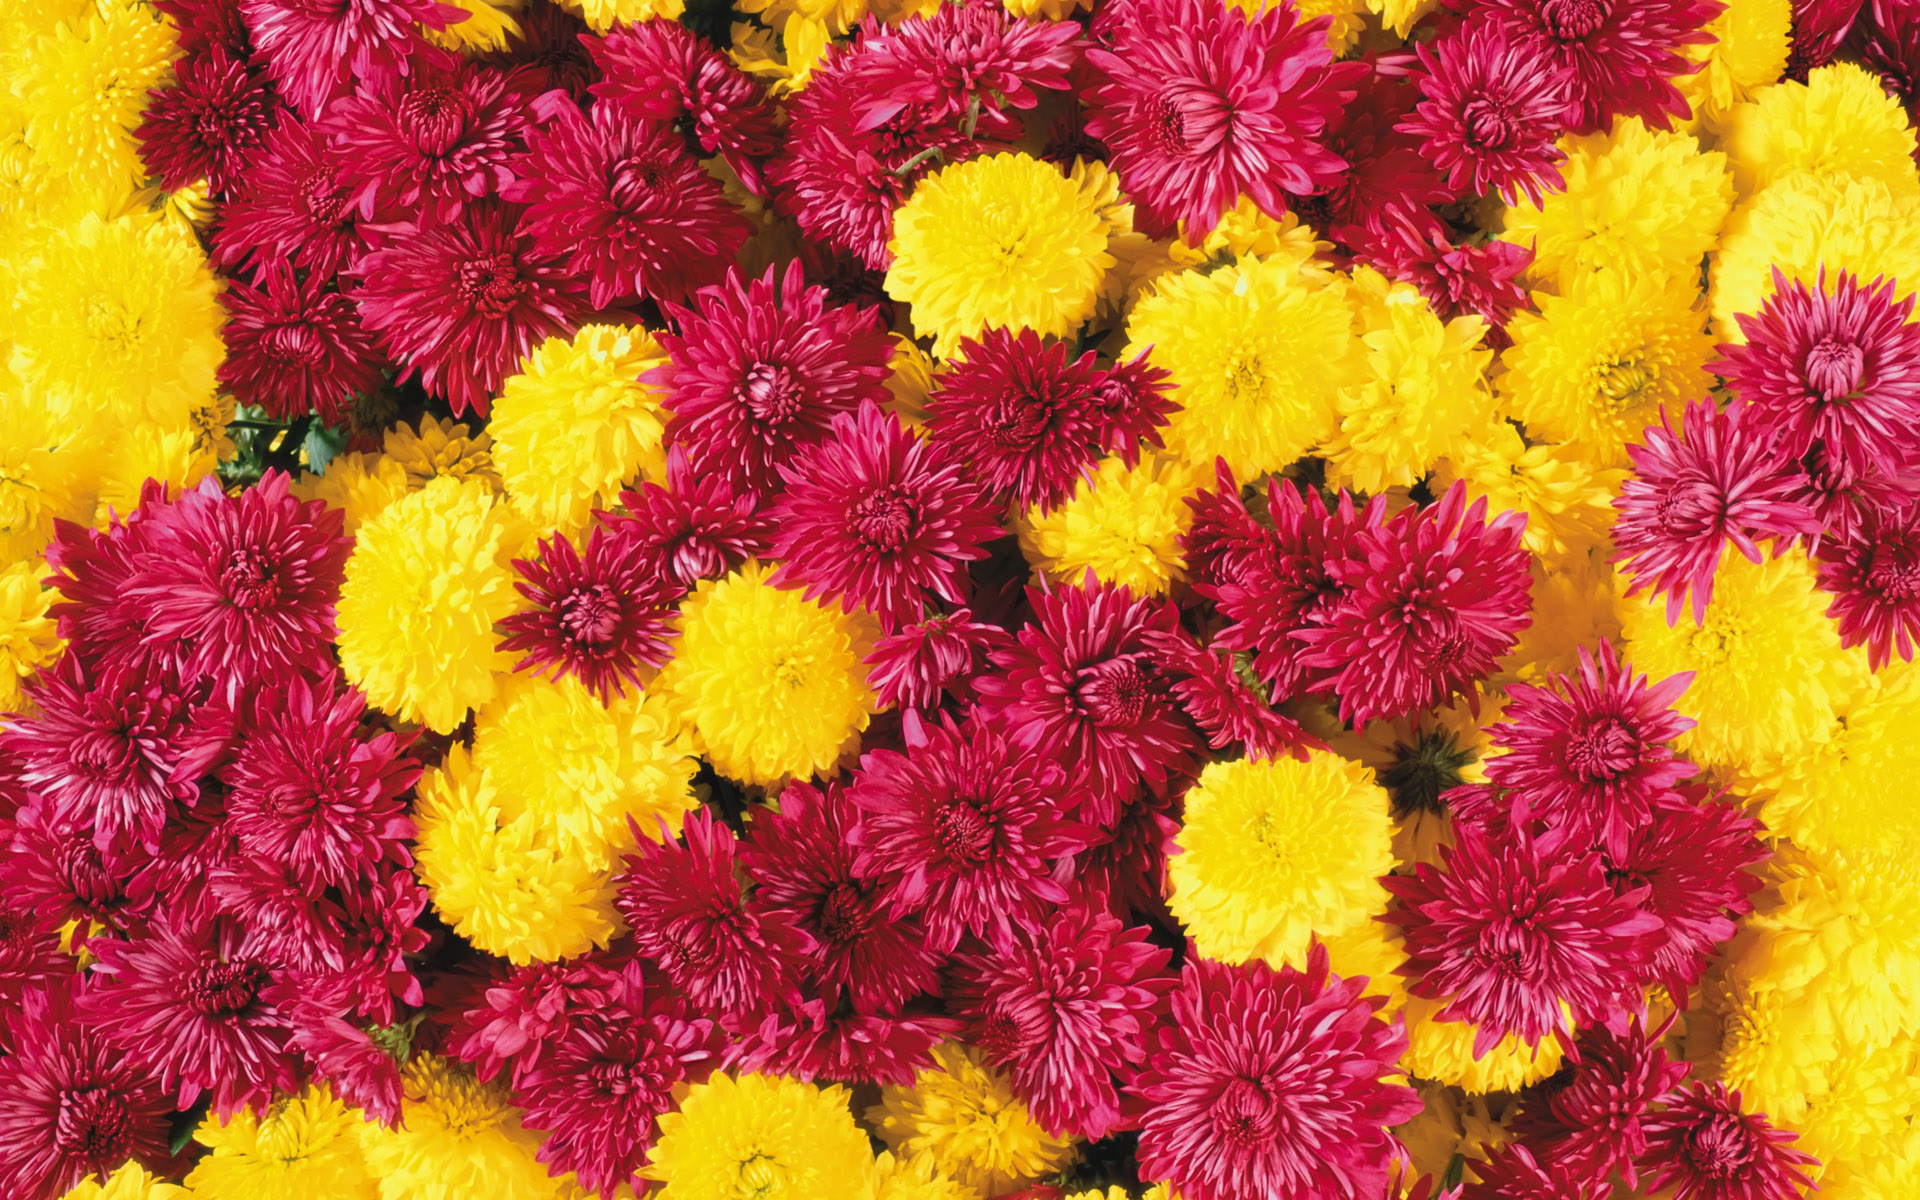 хризантемы, цветы, желтые, бордовые, осенние цветы, chrysanthemums, flowers, yellow, maroon, autumn flowers